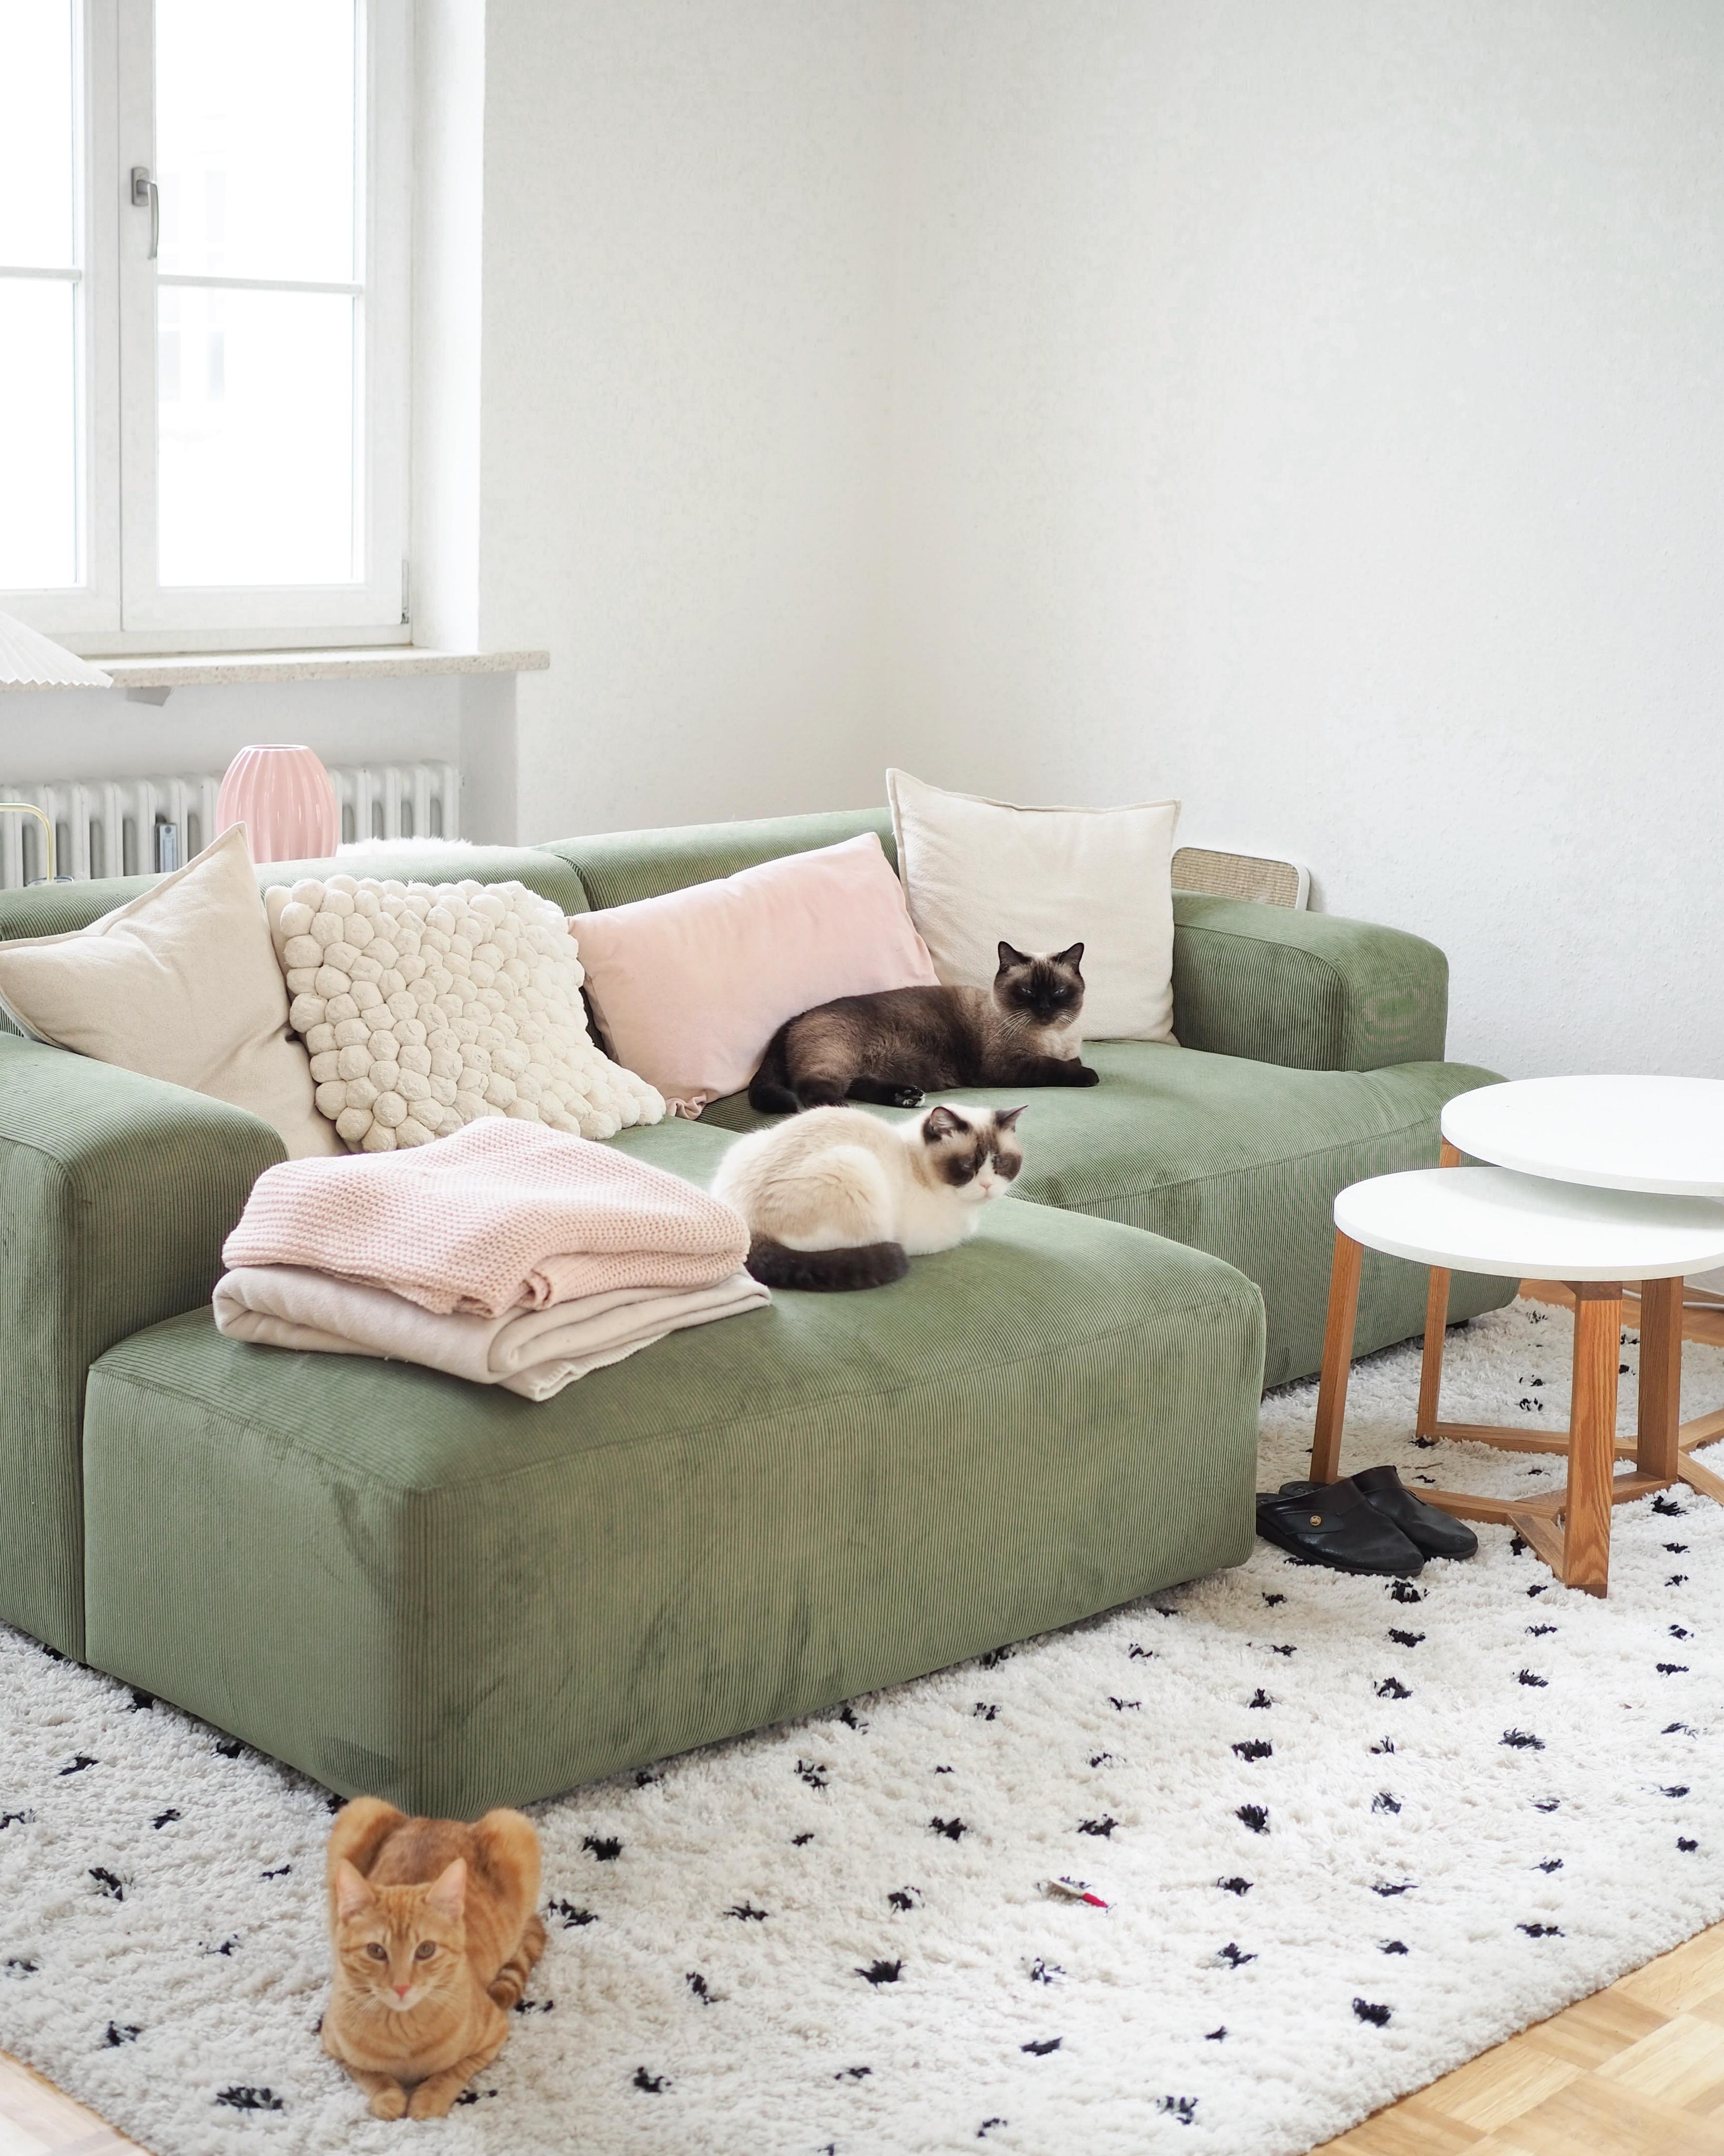 Cats, cats, cats 😁
#couch #sofa #katzen #skandihome #wohnzimmer #skandiliving #nordic #livingroom 